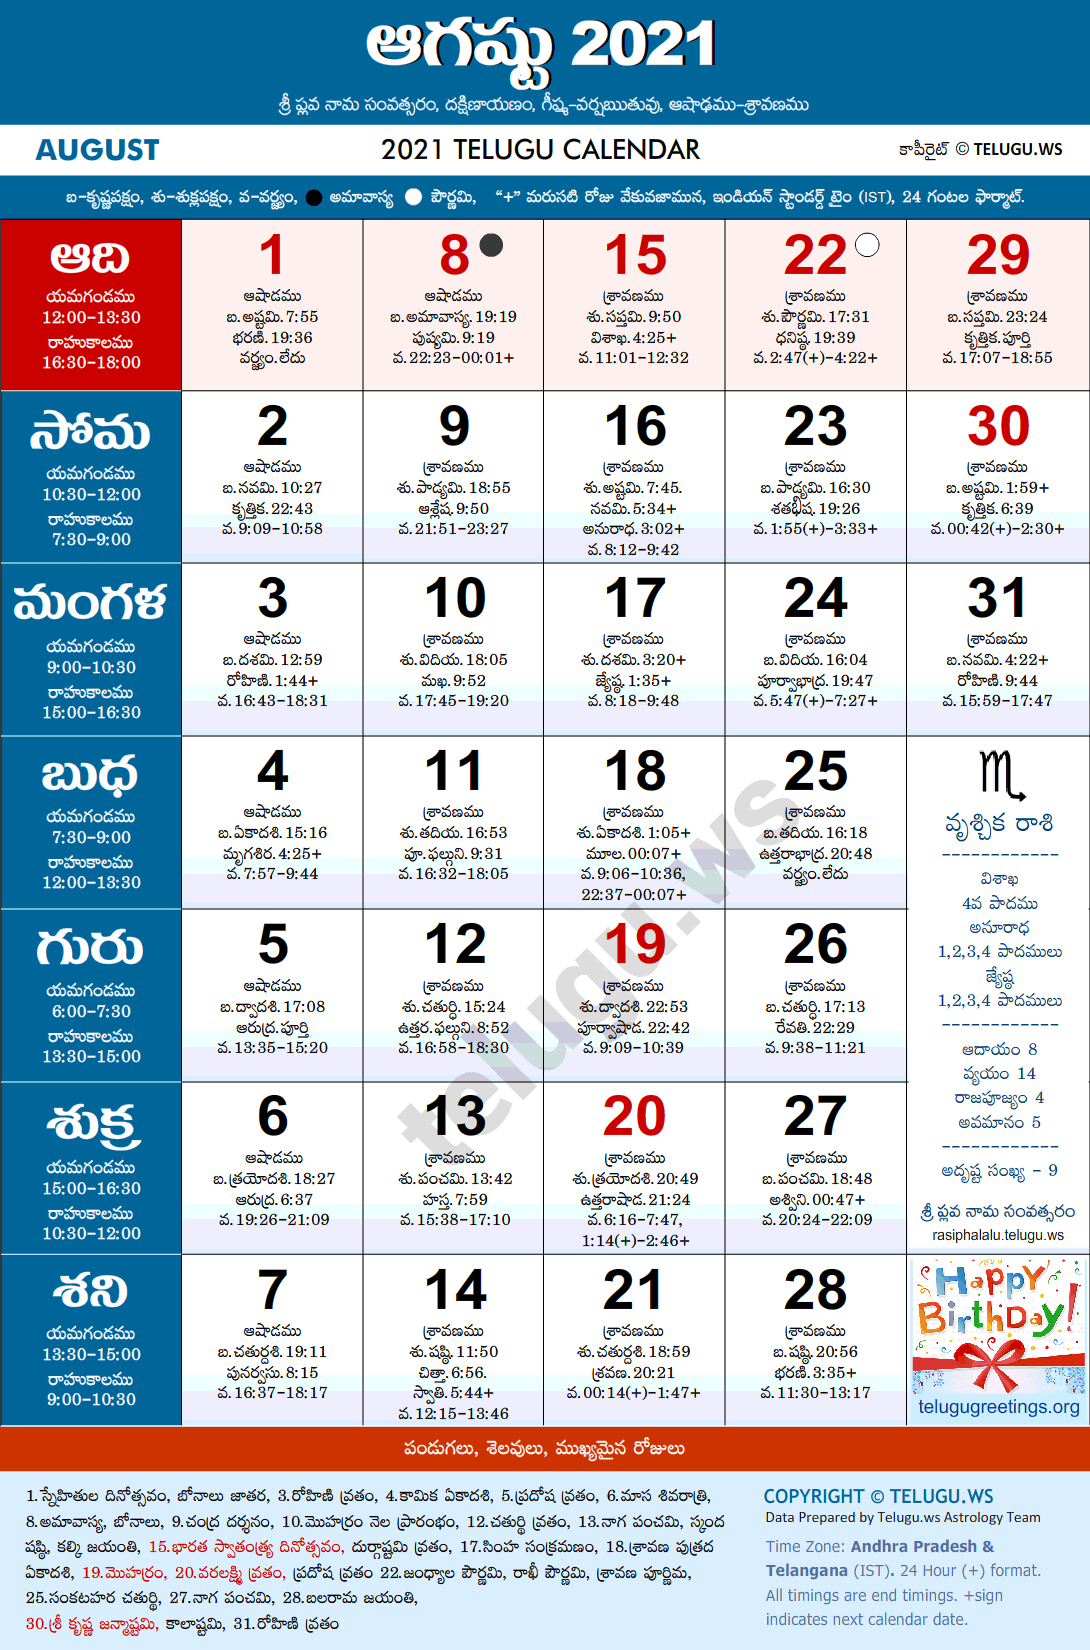 Telugu Calendar 2021 August Pdf Print With Festivals-List Of Festivals 2021 To Print Out